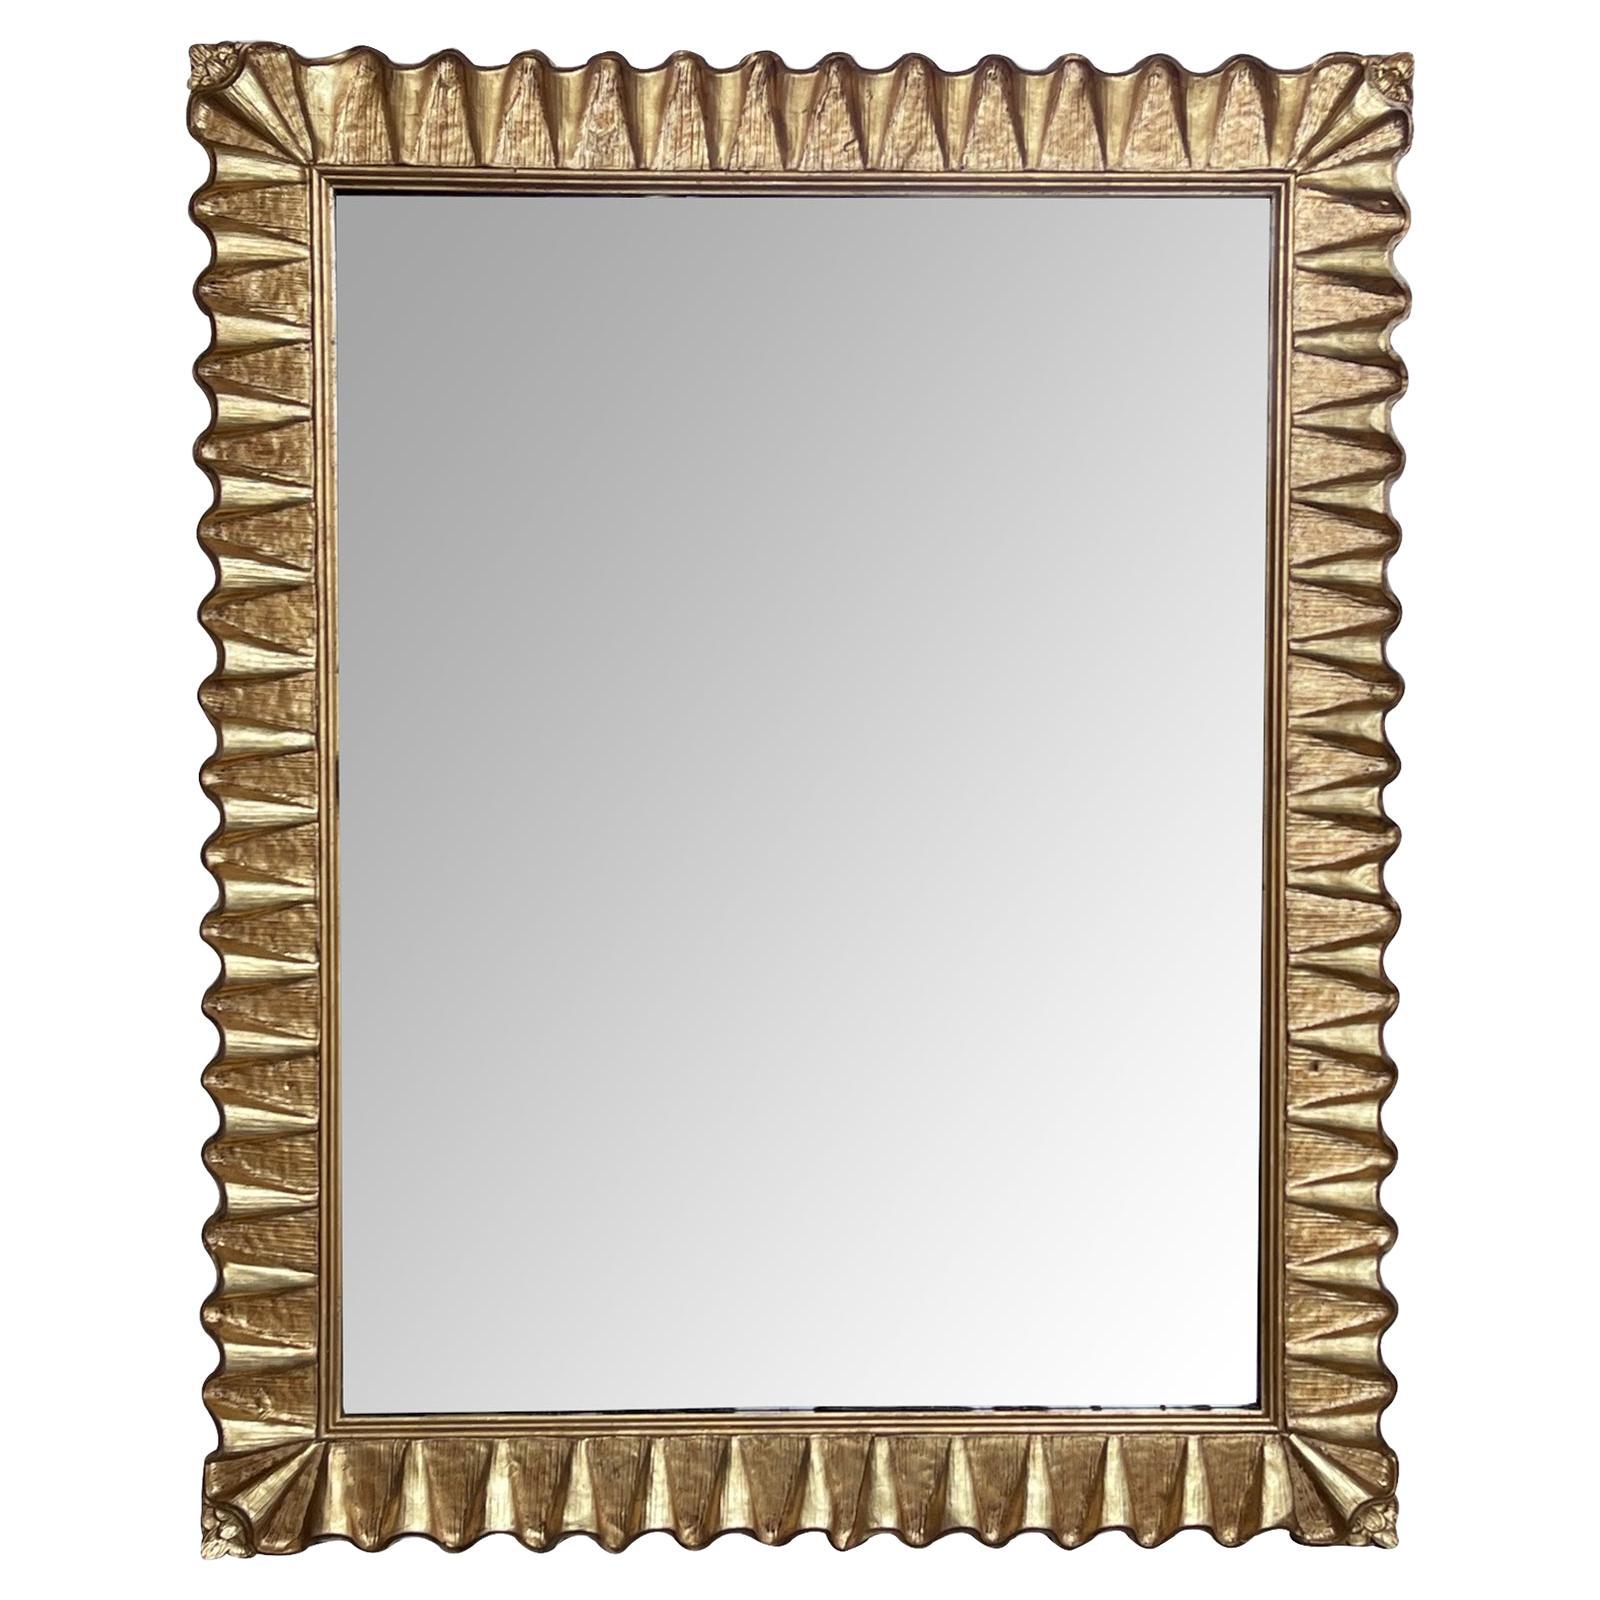 Hollywood Regency Vergoldeter rechteckiger Spiegel mit wellenförmig gerafftem Rahmen